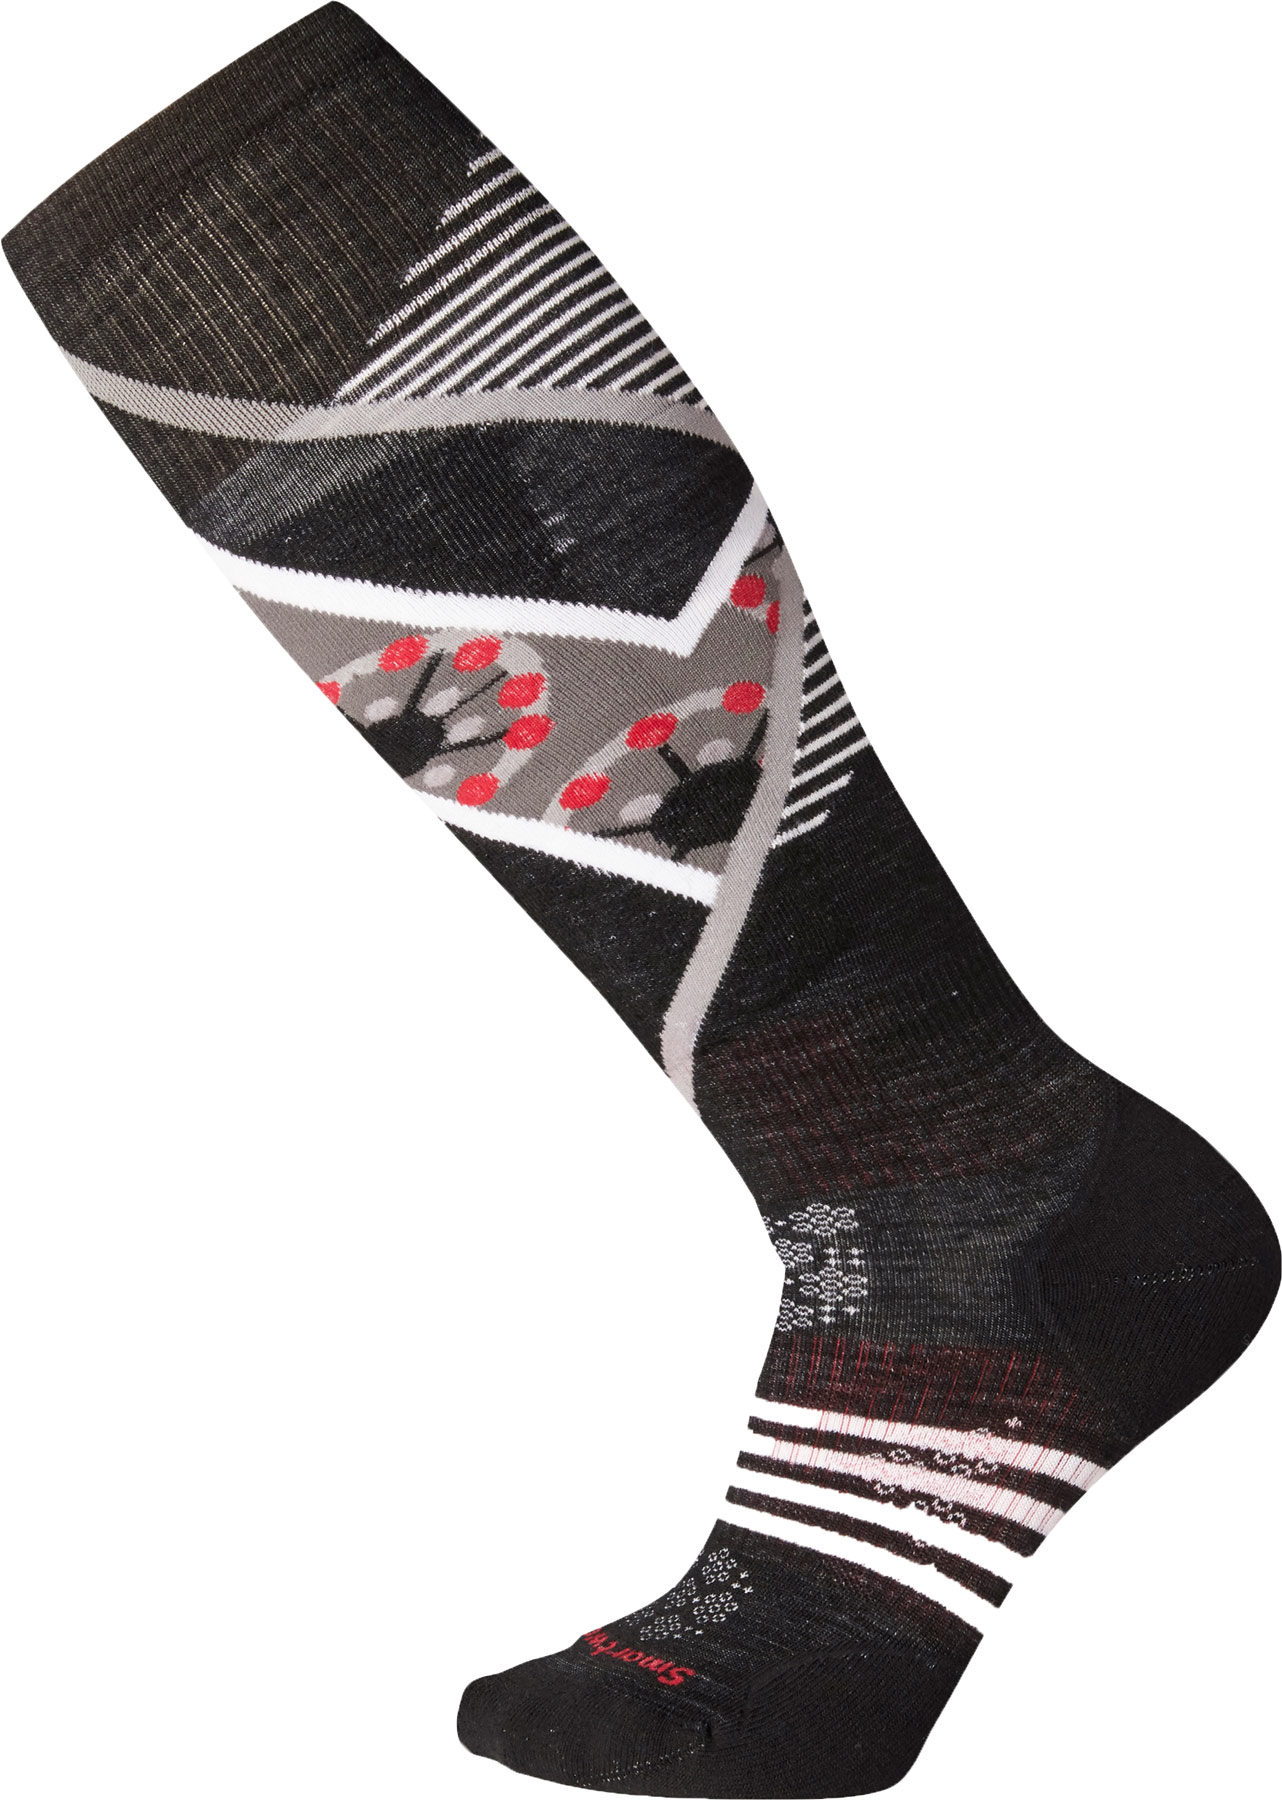 Women’s ski socks